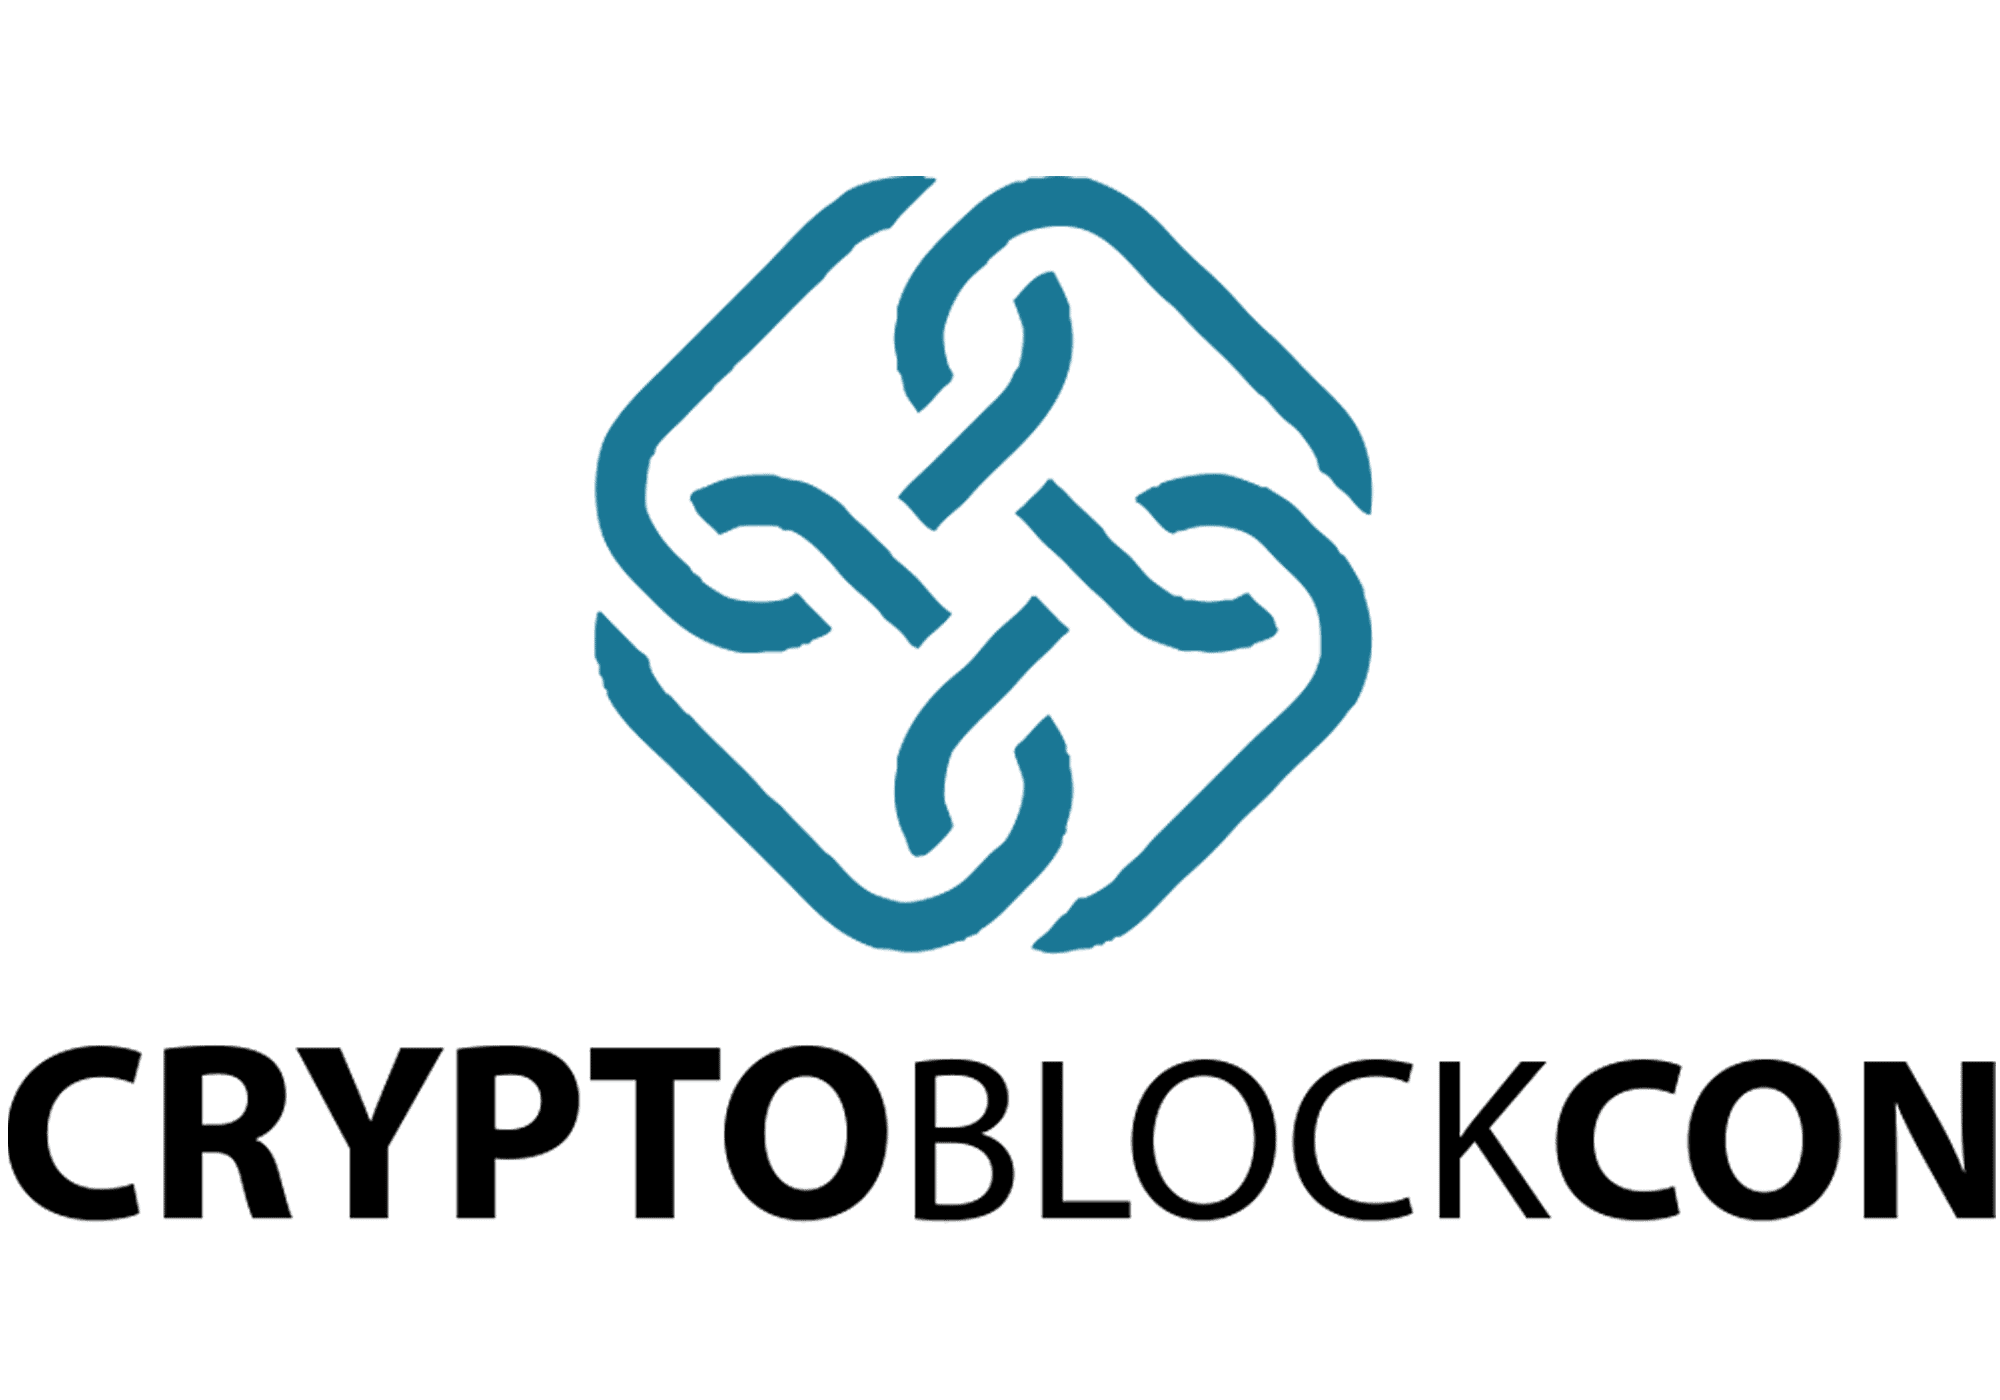 CRYPTOBLOCKCON Official Logo - Transparent - Color - Stacked